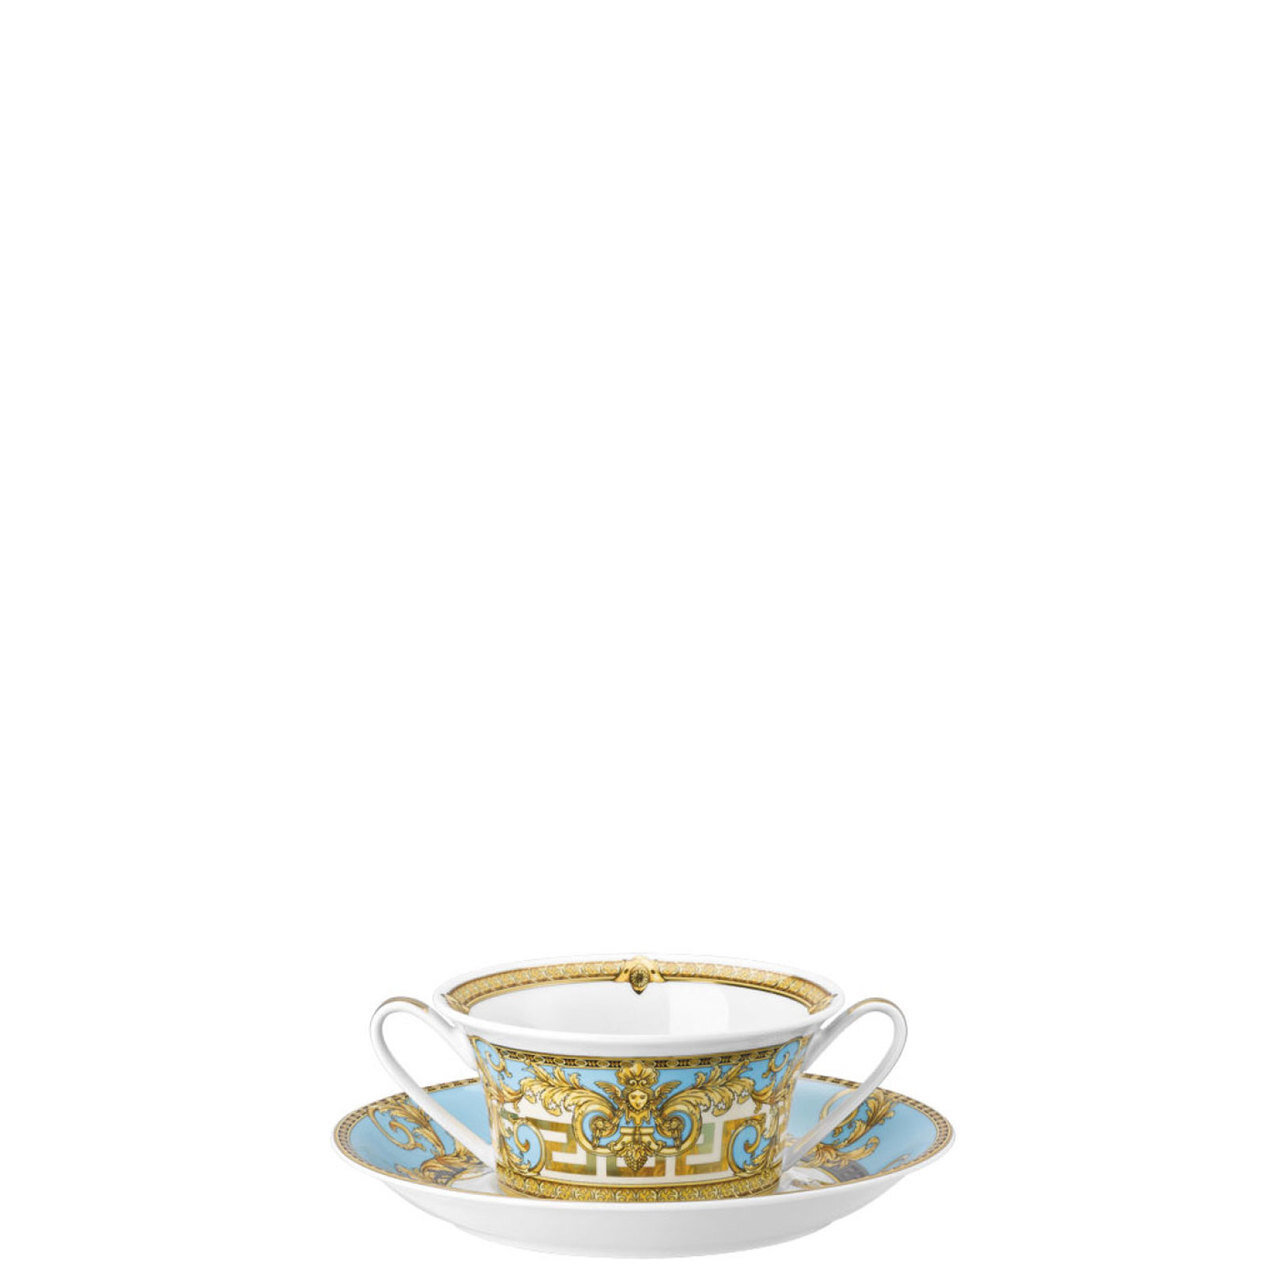 Versace Prestige Gala Bleu Cream Soup Cup and Saucer 10 oz.